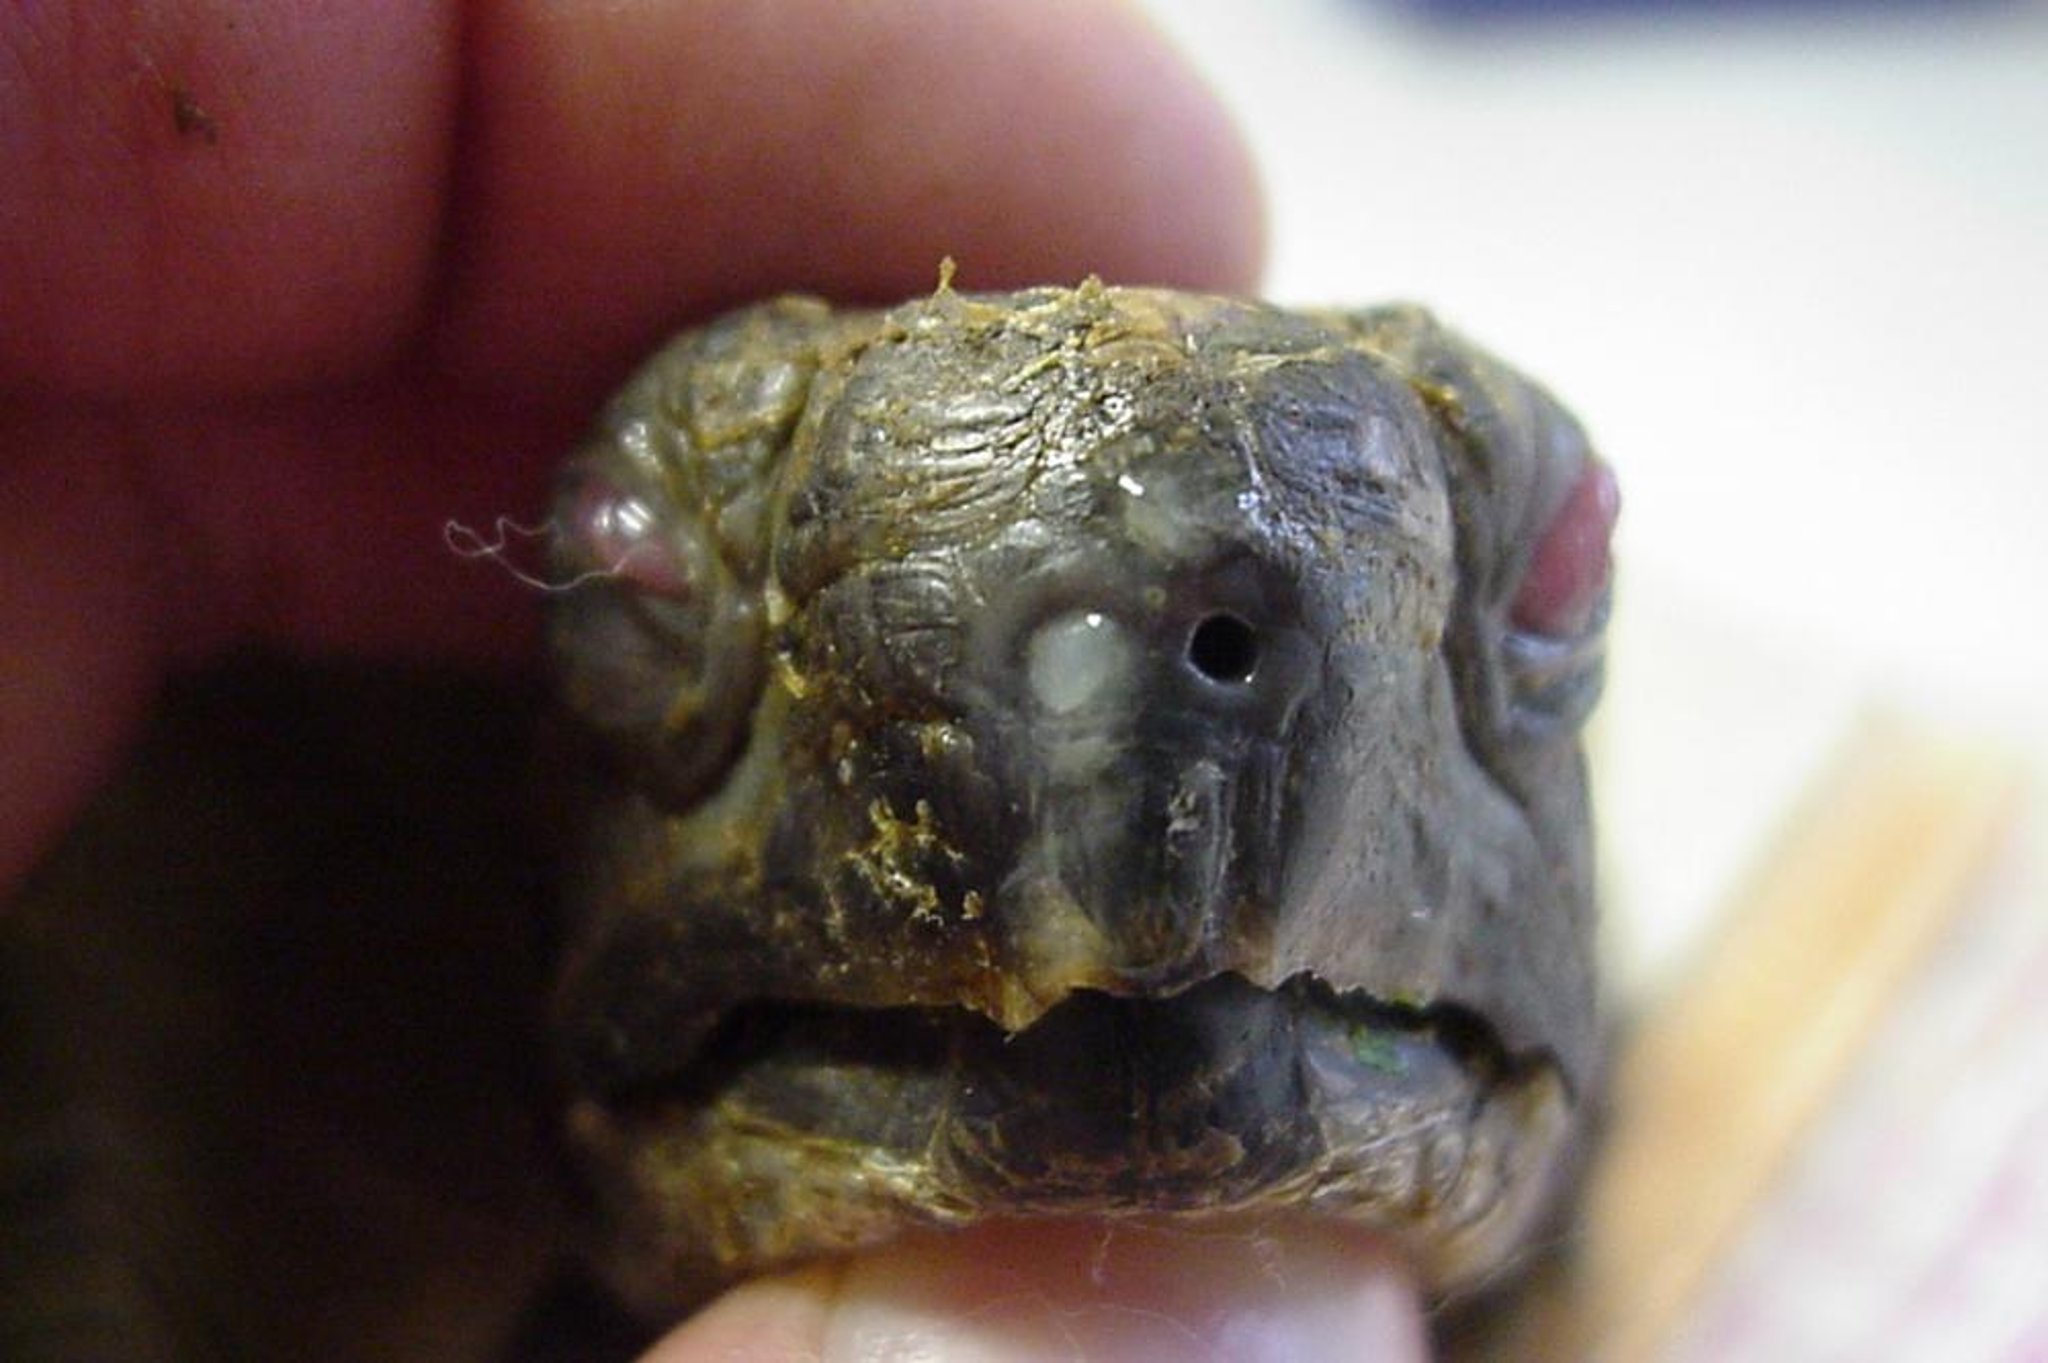 Upper respiratory tract disease, tortoise